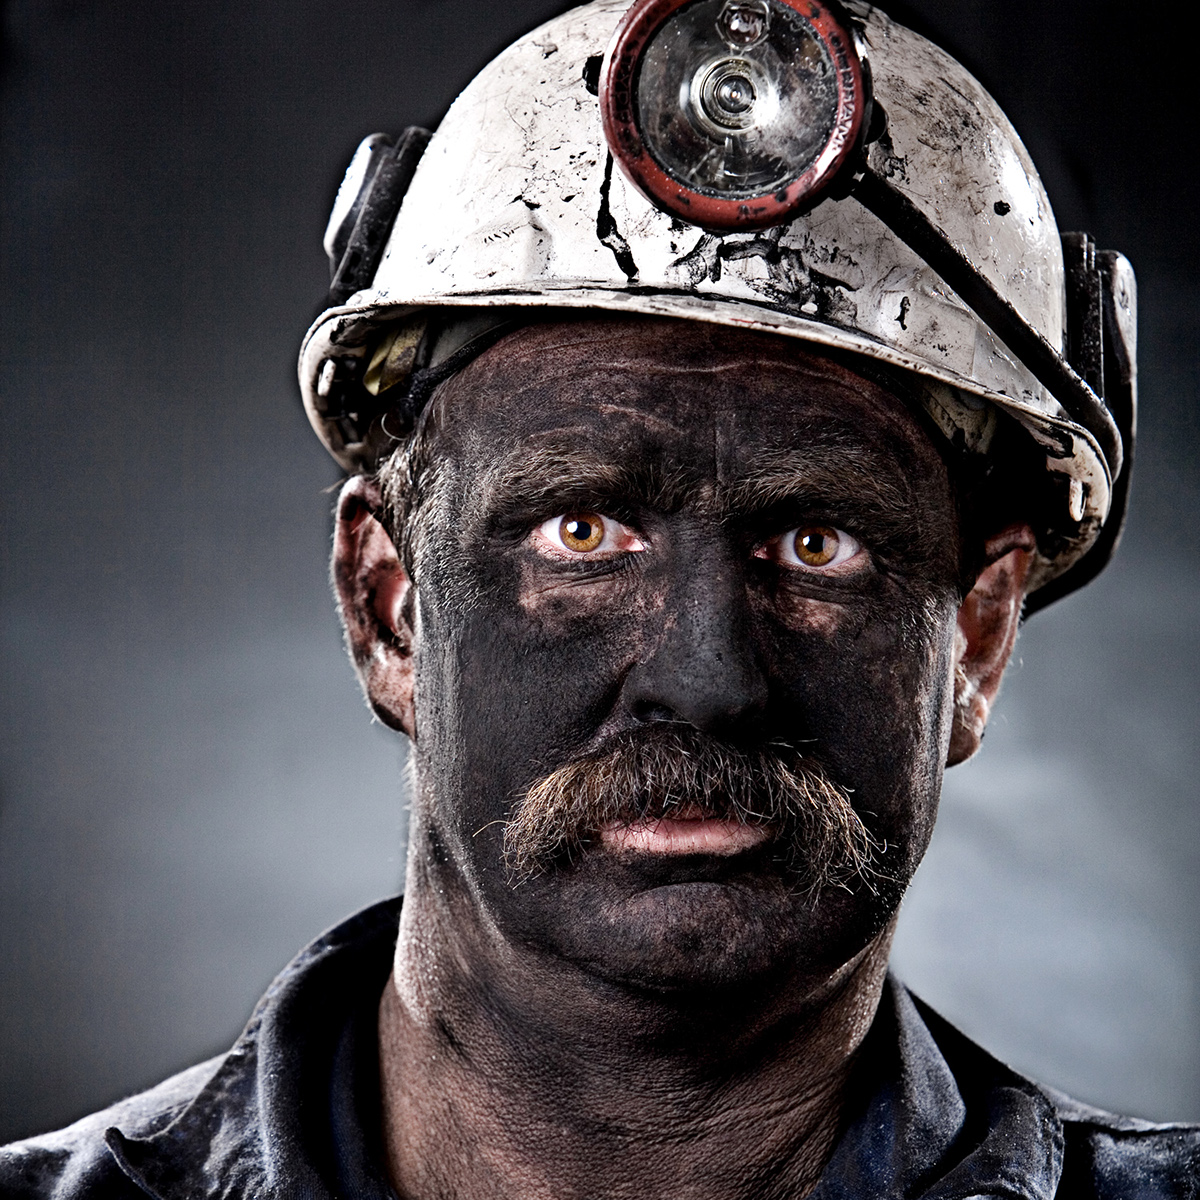 Coal Mining portraits studio